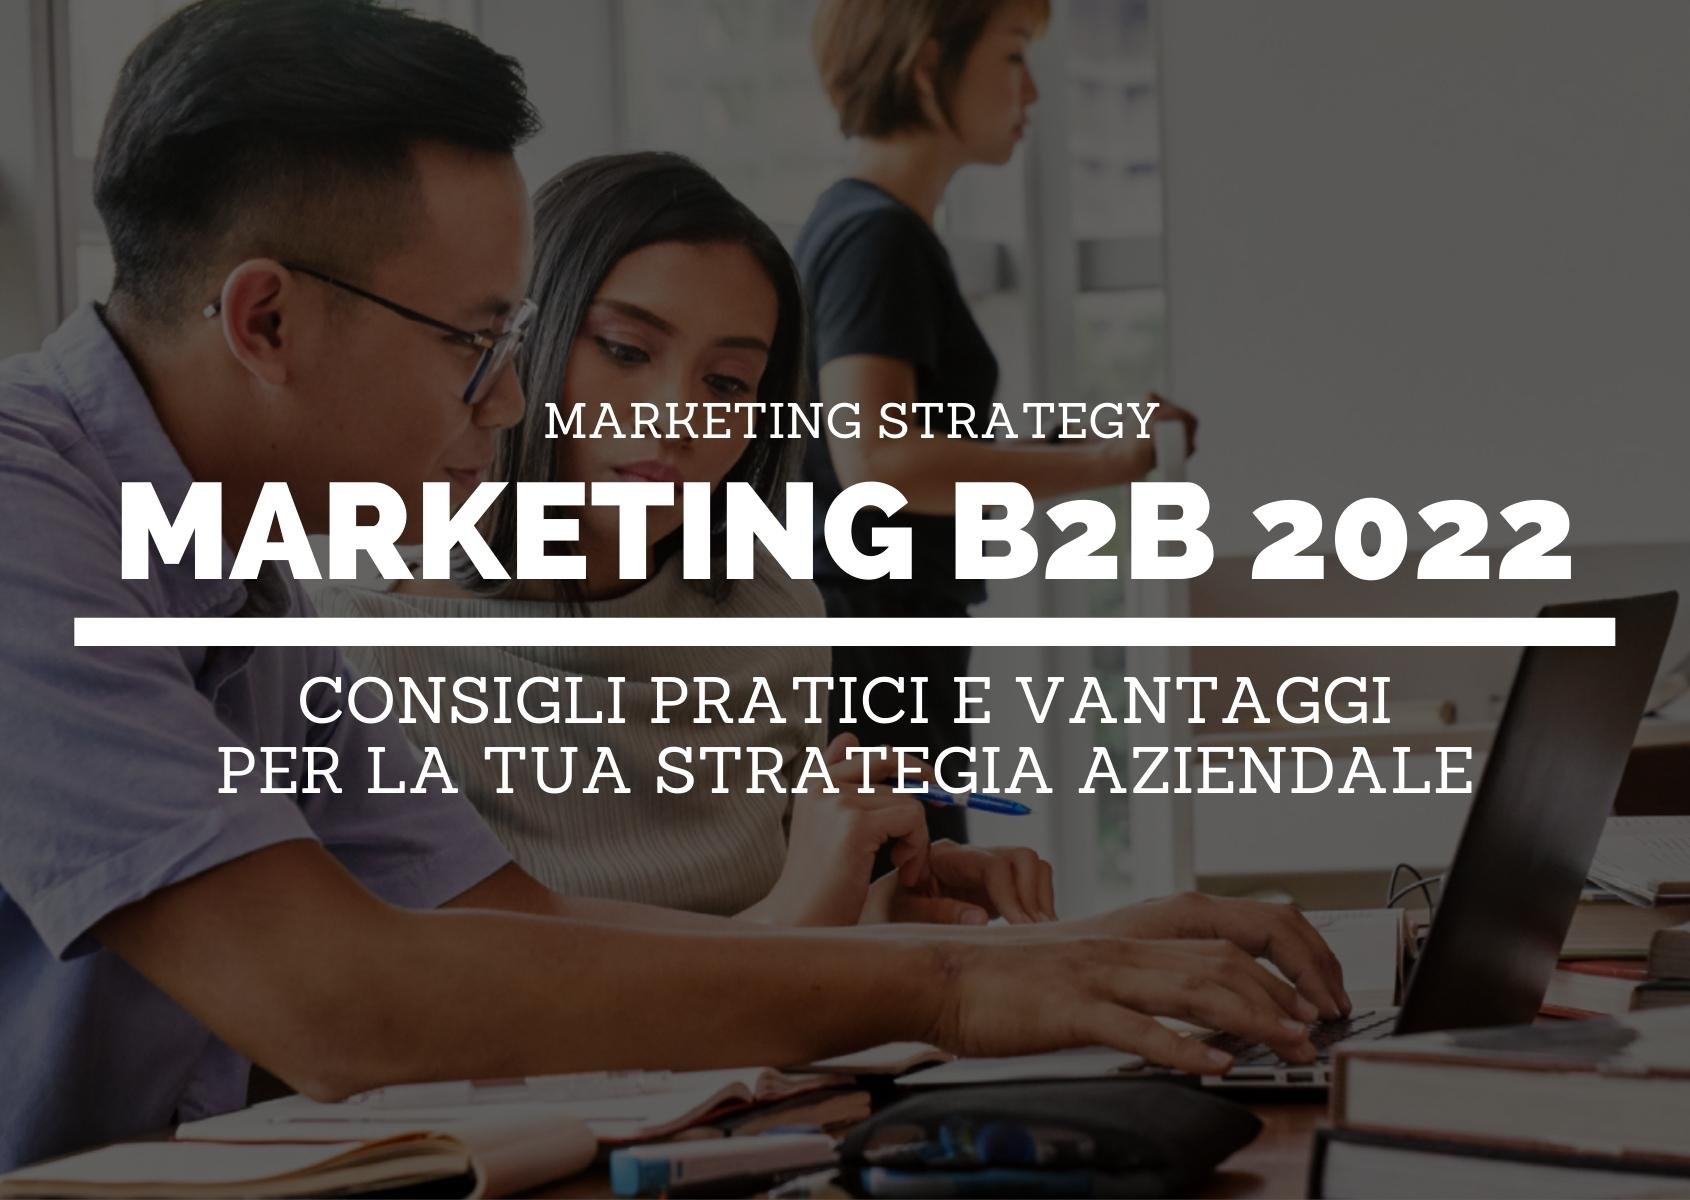 Strategie-marketingb2b-2022-HEADER